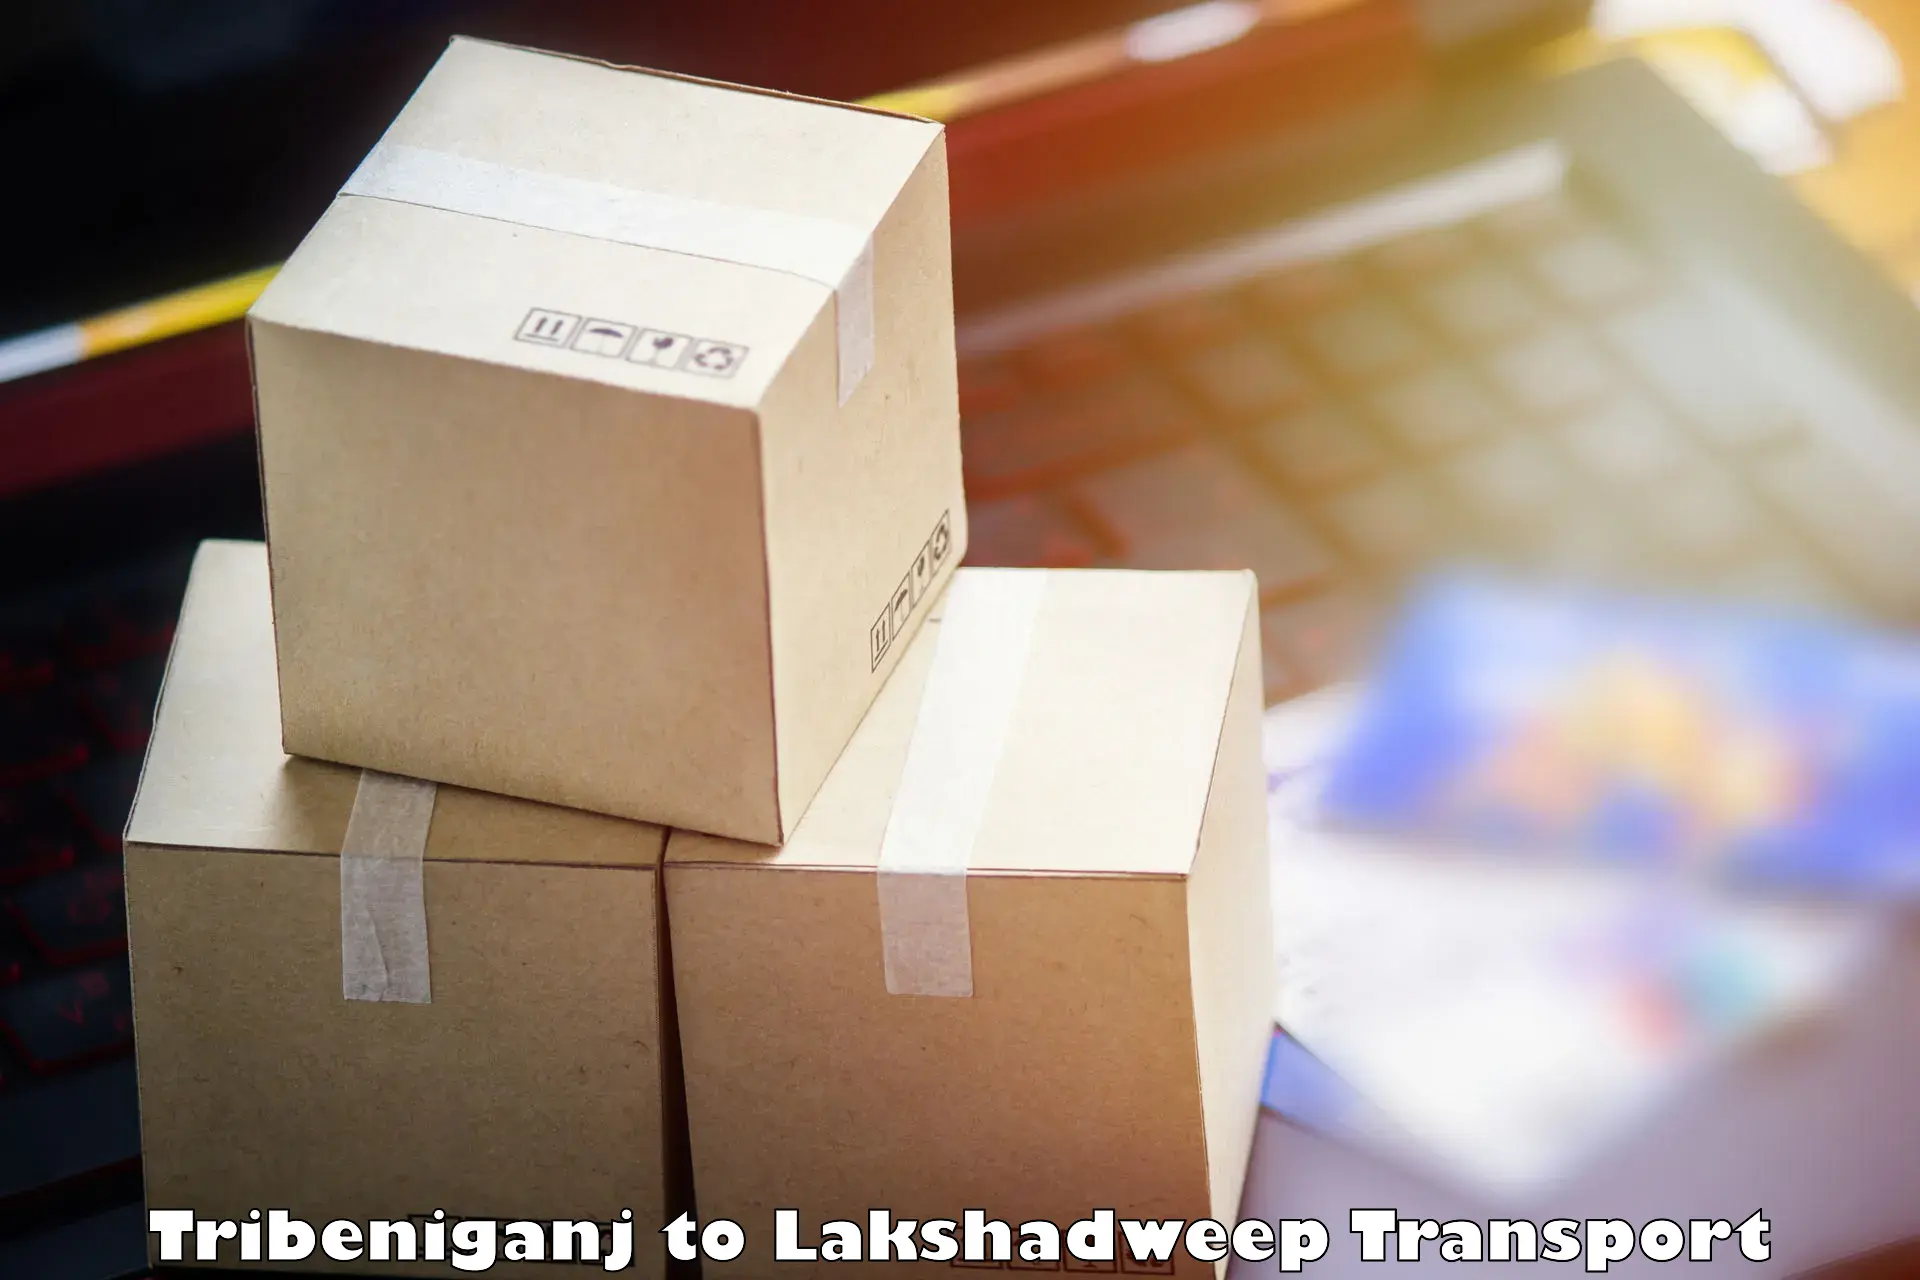 Shipping partner Tribeniganj to Lakshadweep